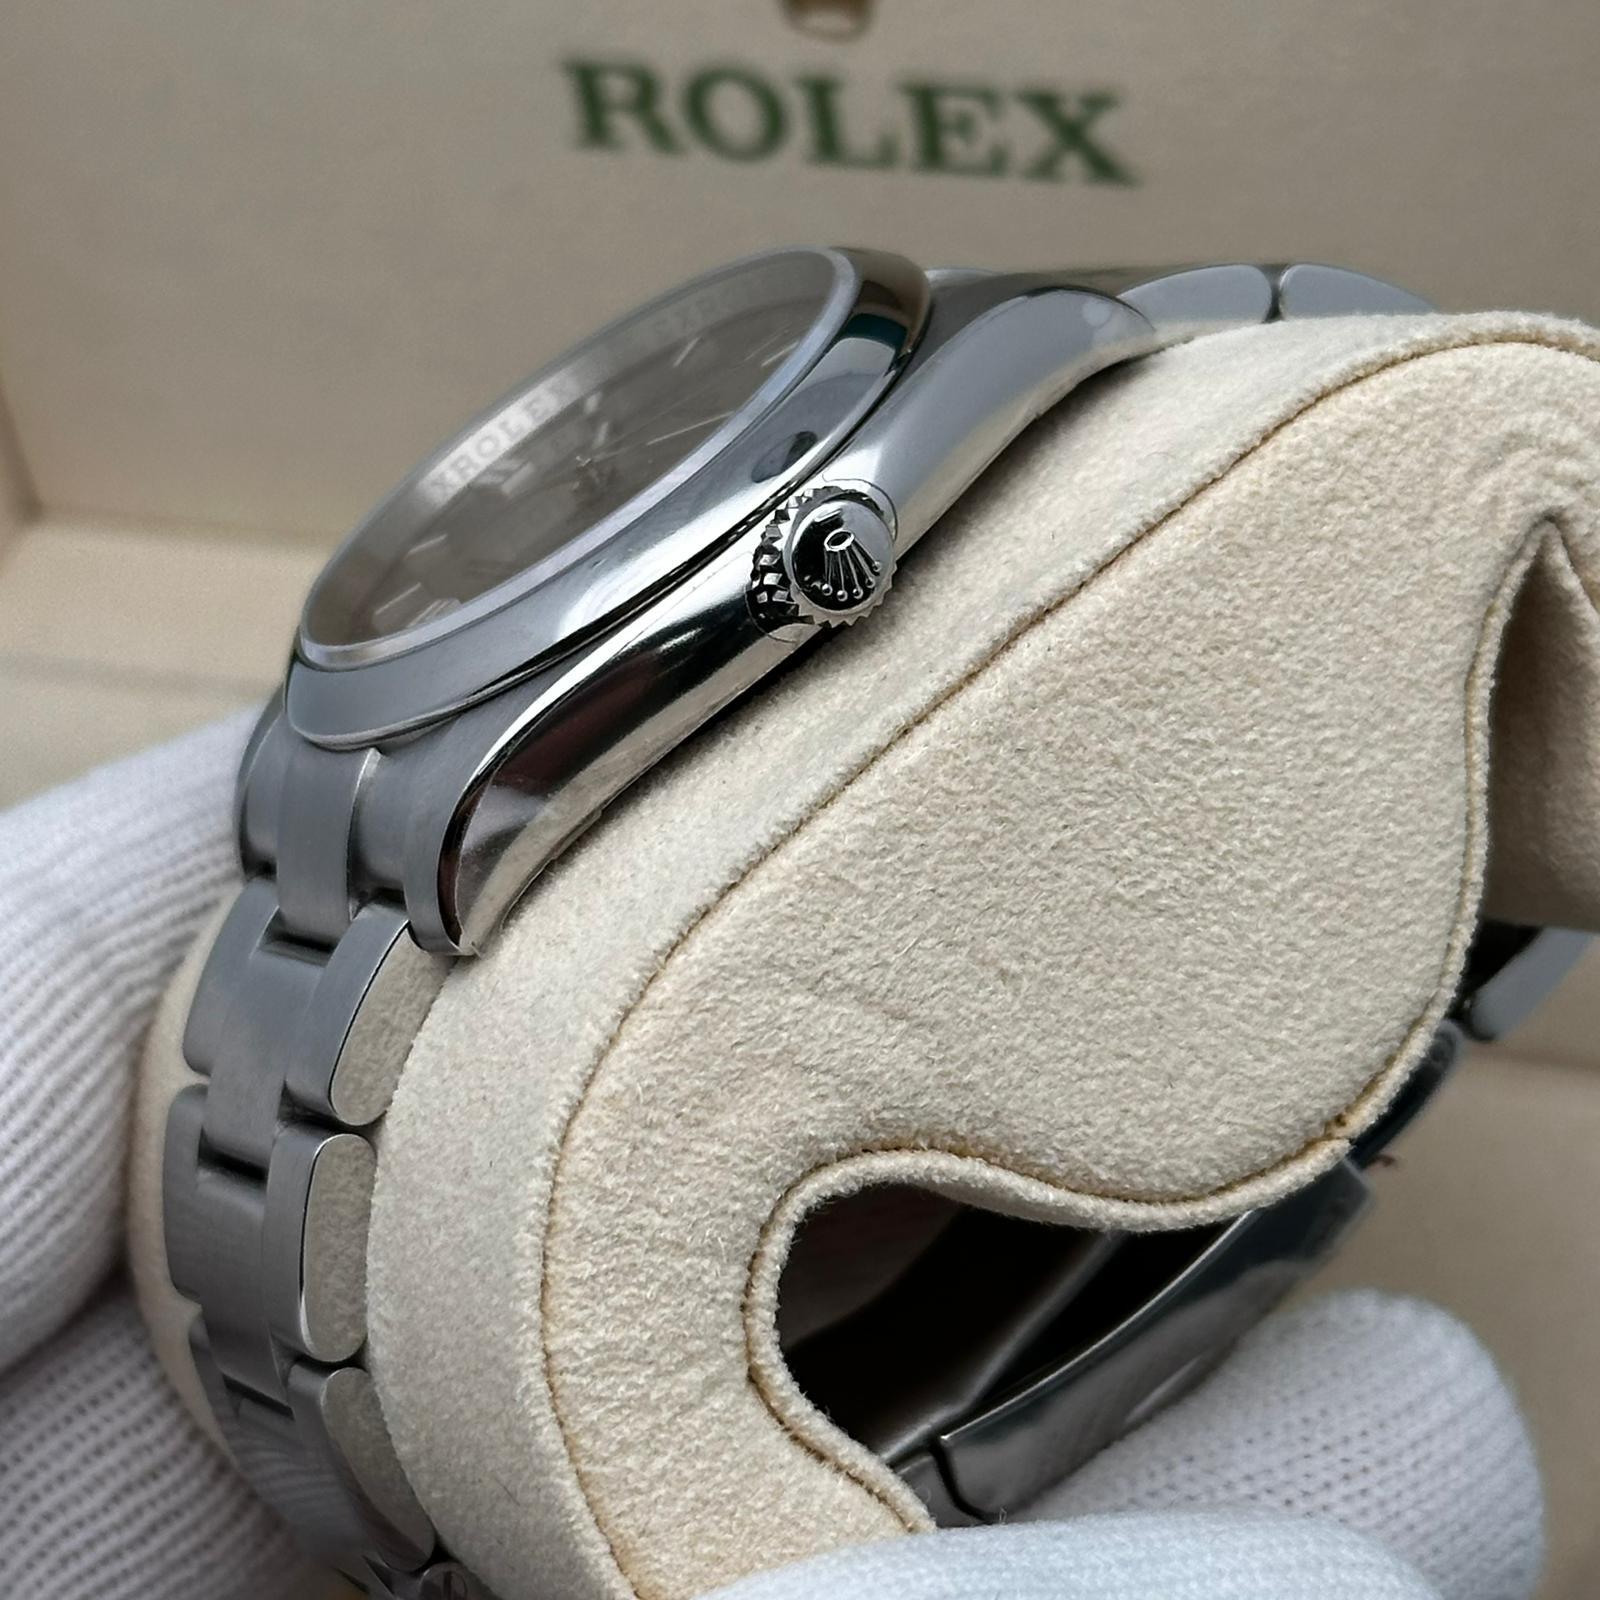 Rolex Oyster Perpetual 36mm Steel Gray Dial Automatic Men Watch 116000 Unworn 1